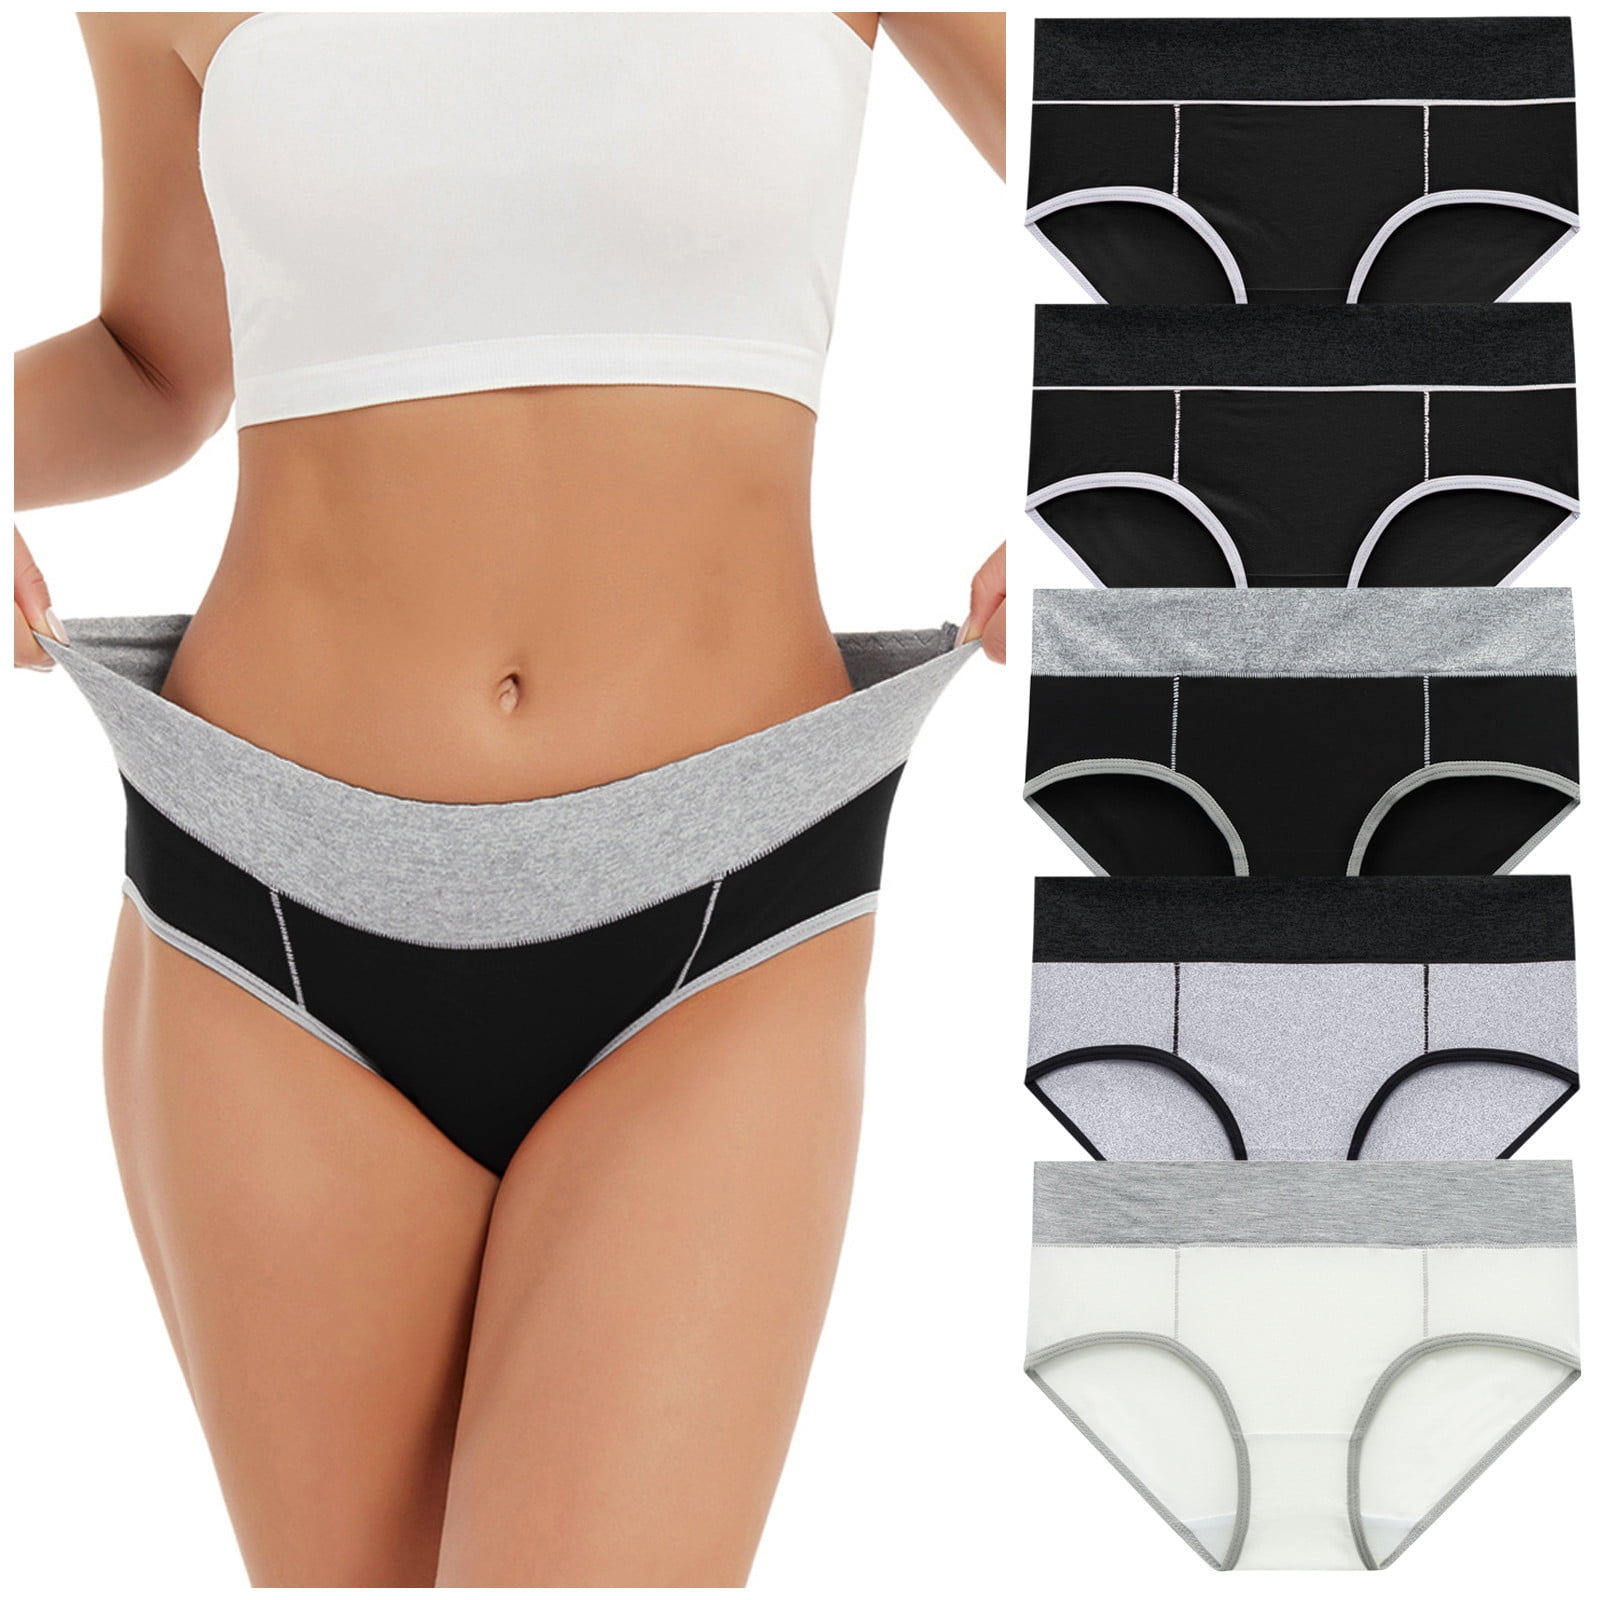 Ass Sexy Woman Cotton Underwear Perfect Stock Photo 751340434